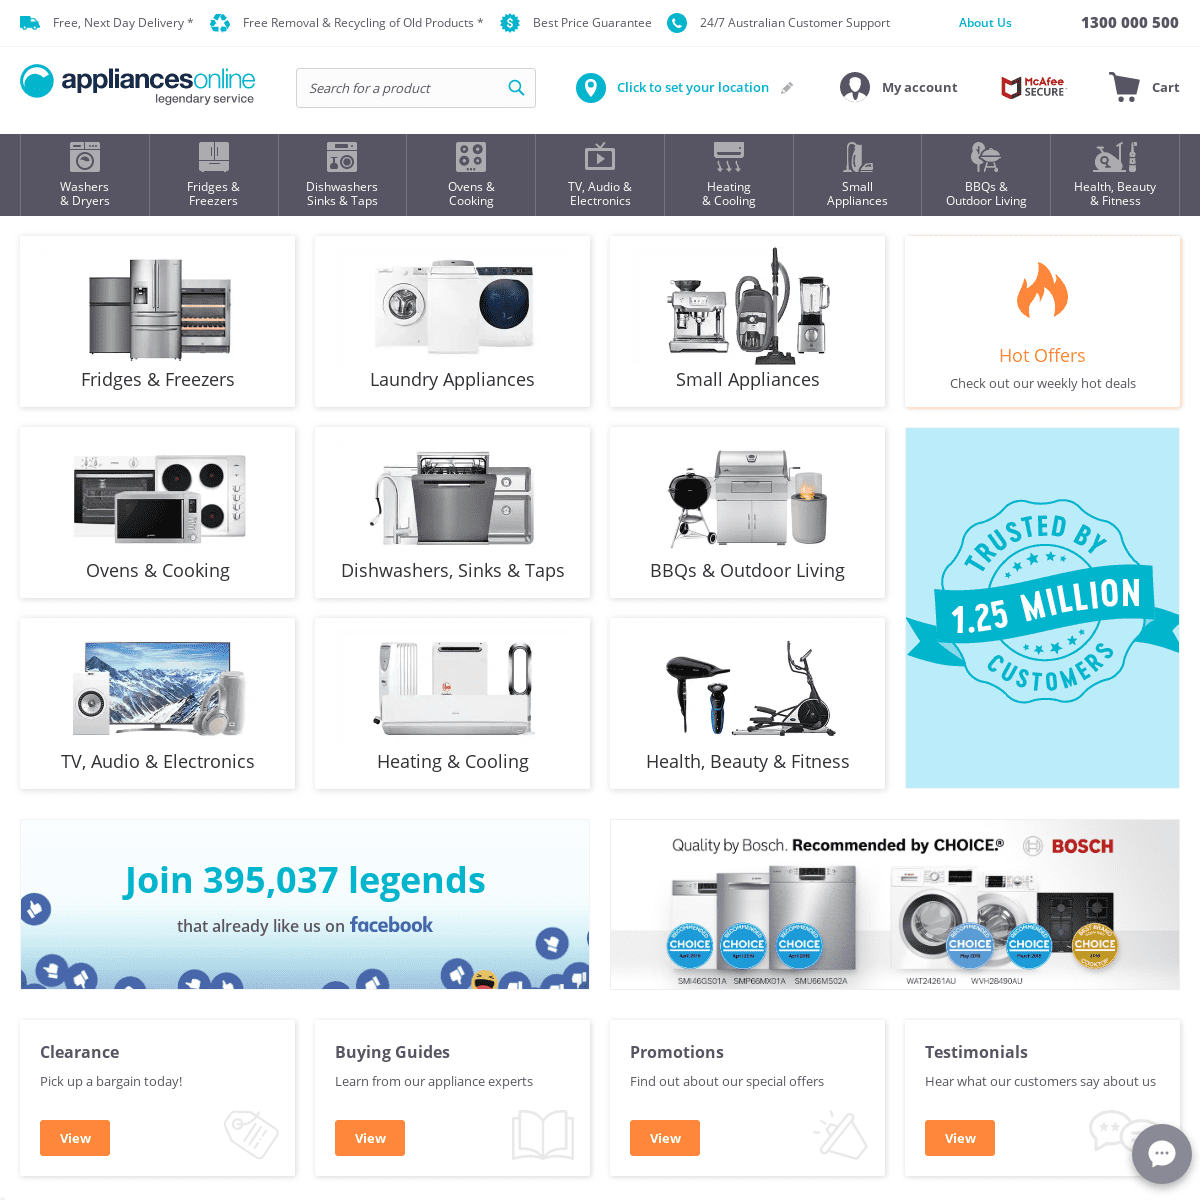 A complete backup of appliancesonline.com.au